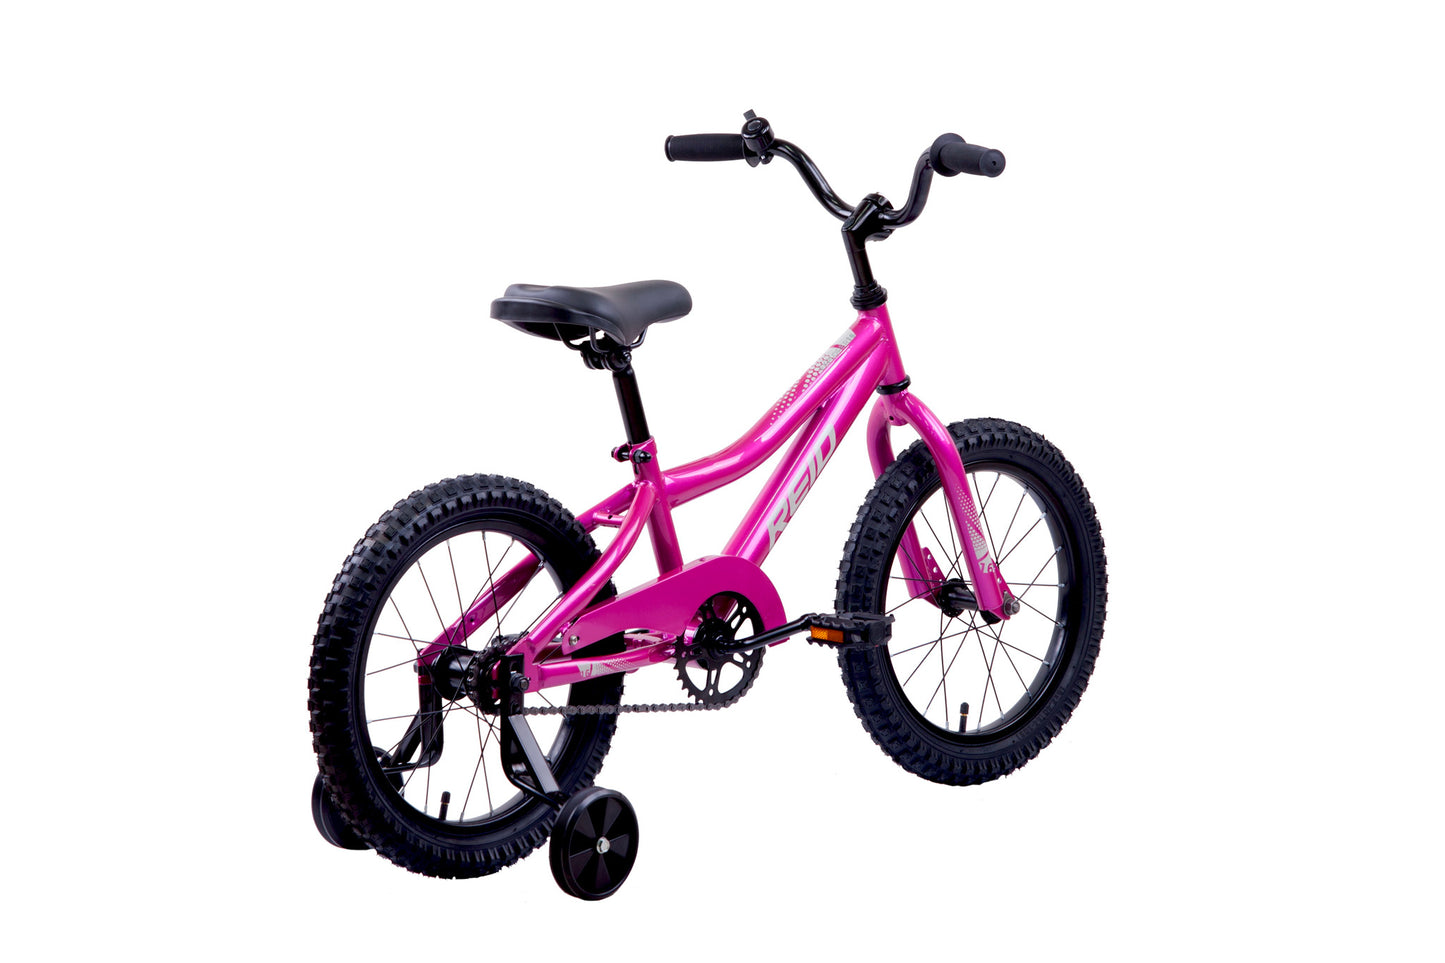 Explorer S MY24 16" Kids Bike Hot Pink